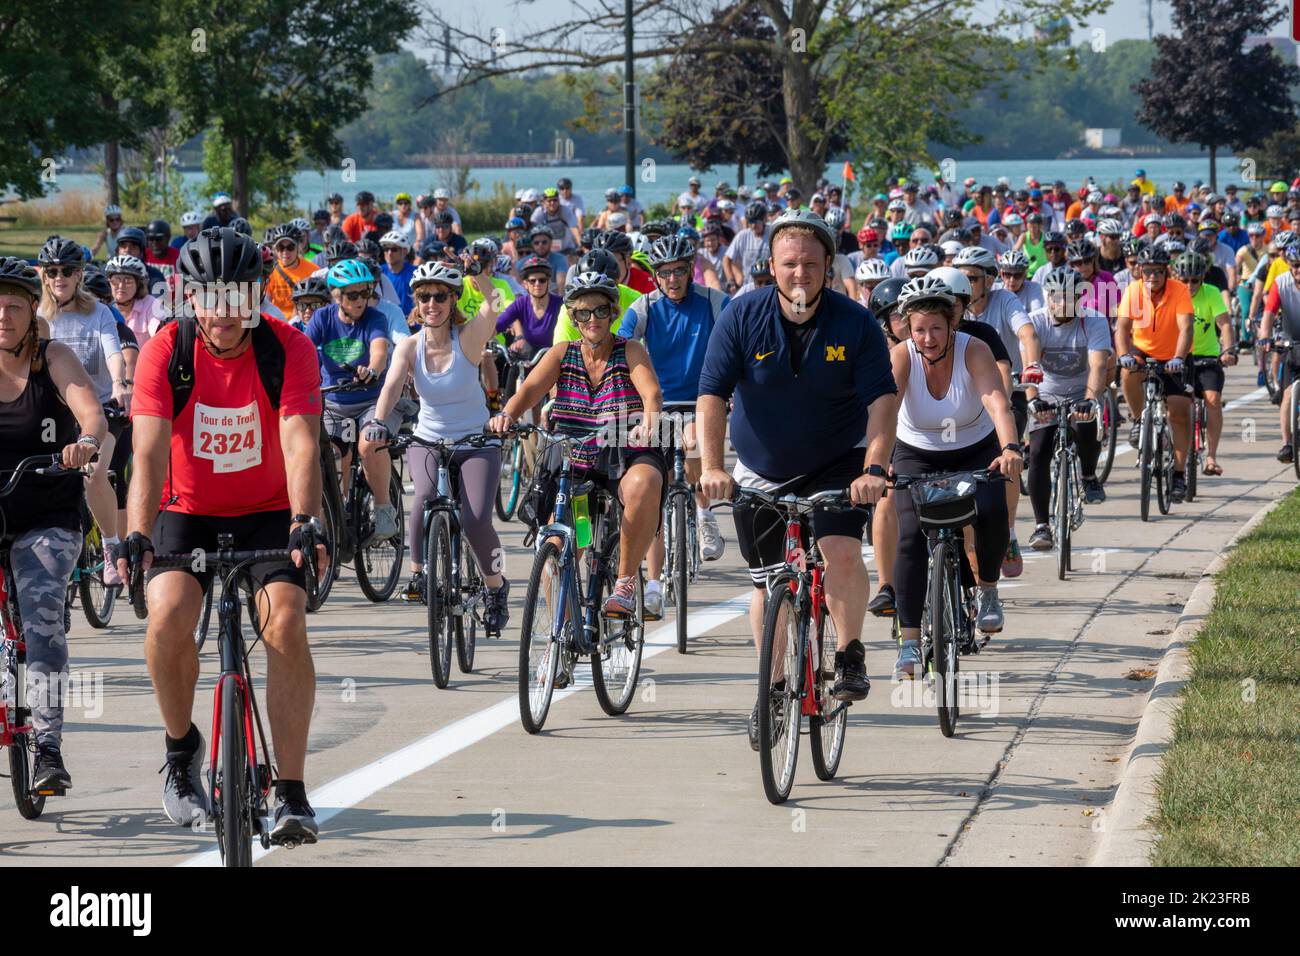 Detroit, Michigan - Miles de jinetes se unieron al Tour de Troit de 2022, parte del cual estaba en Belle Isle a lo largo del río Detroit. El Tour de Troit es un Foto de stock